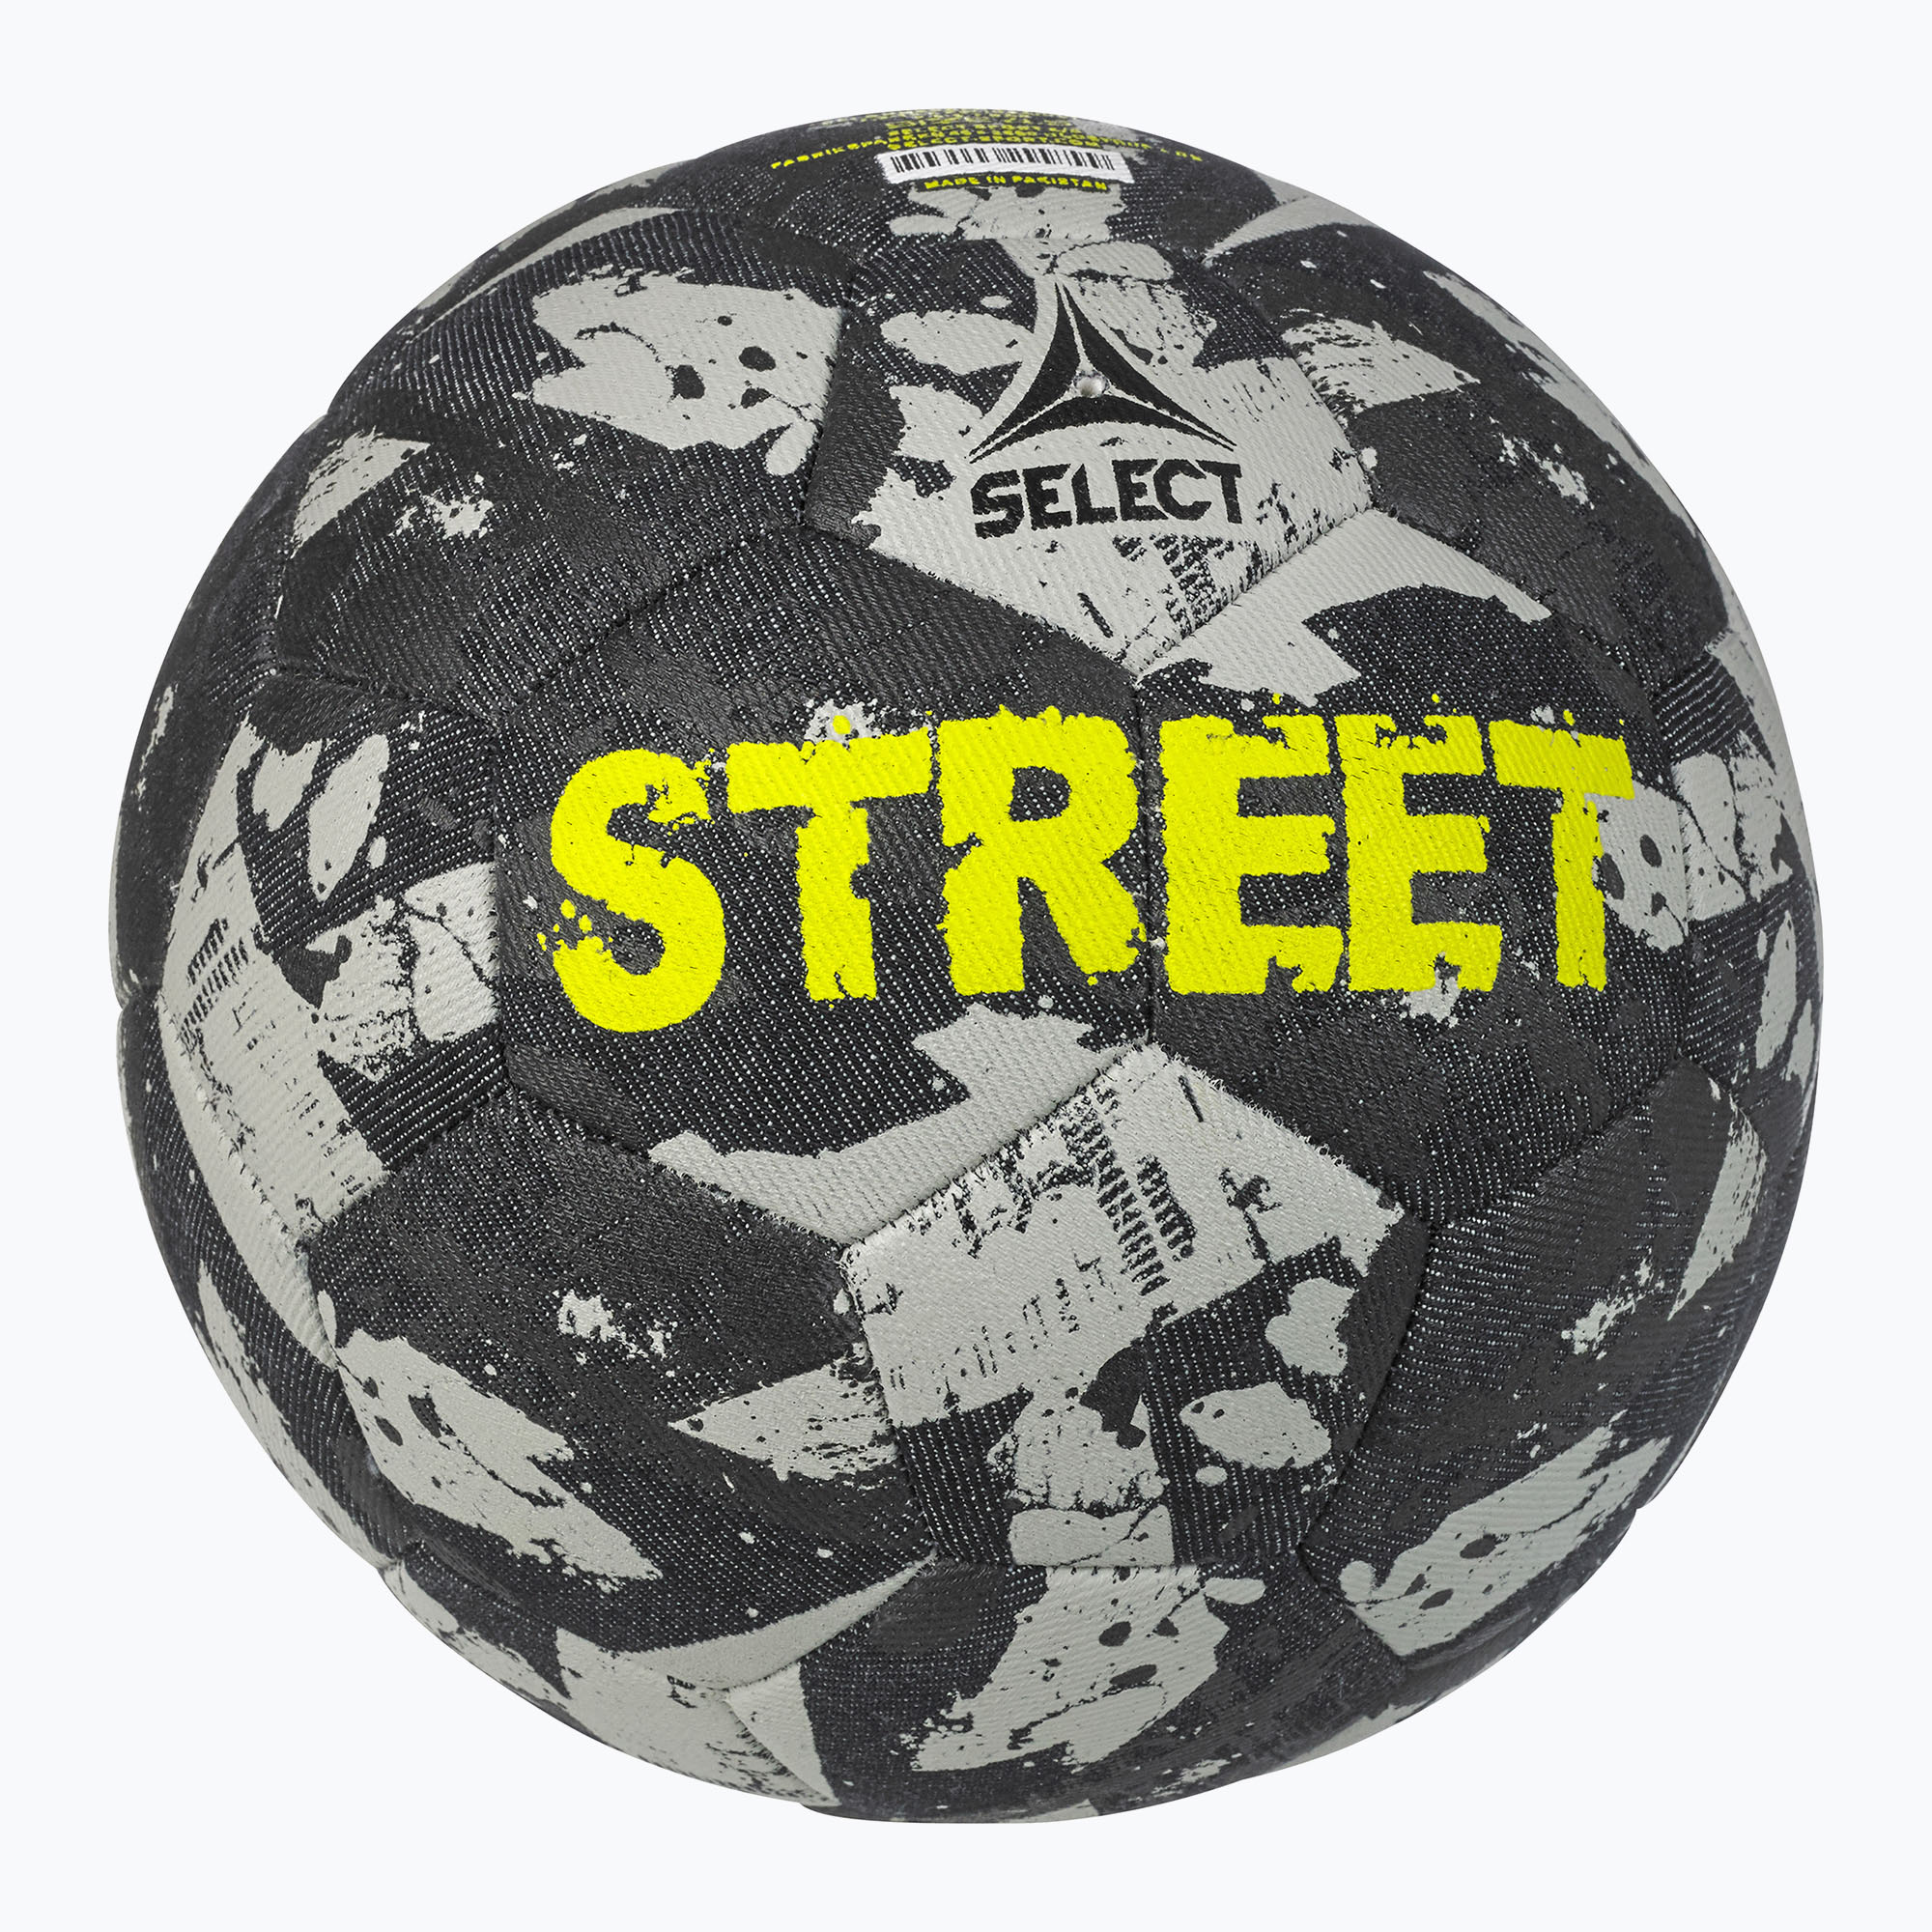 Selectați Street fotbal v23 150034 dimensiune 4.5